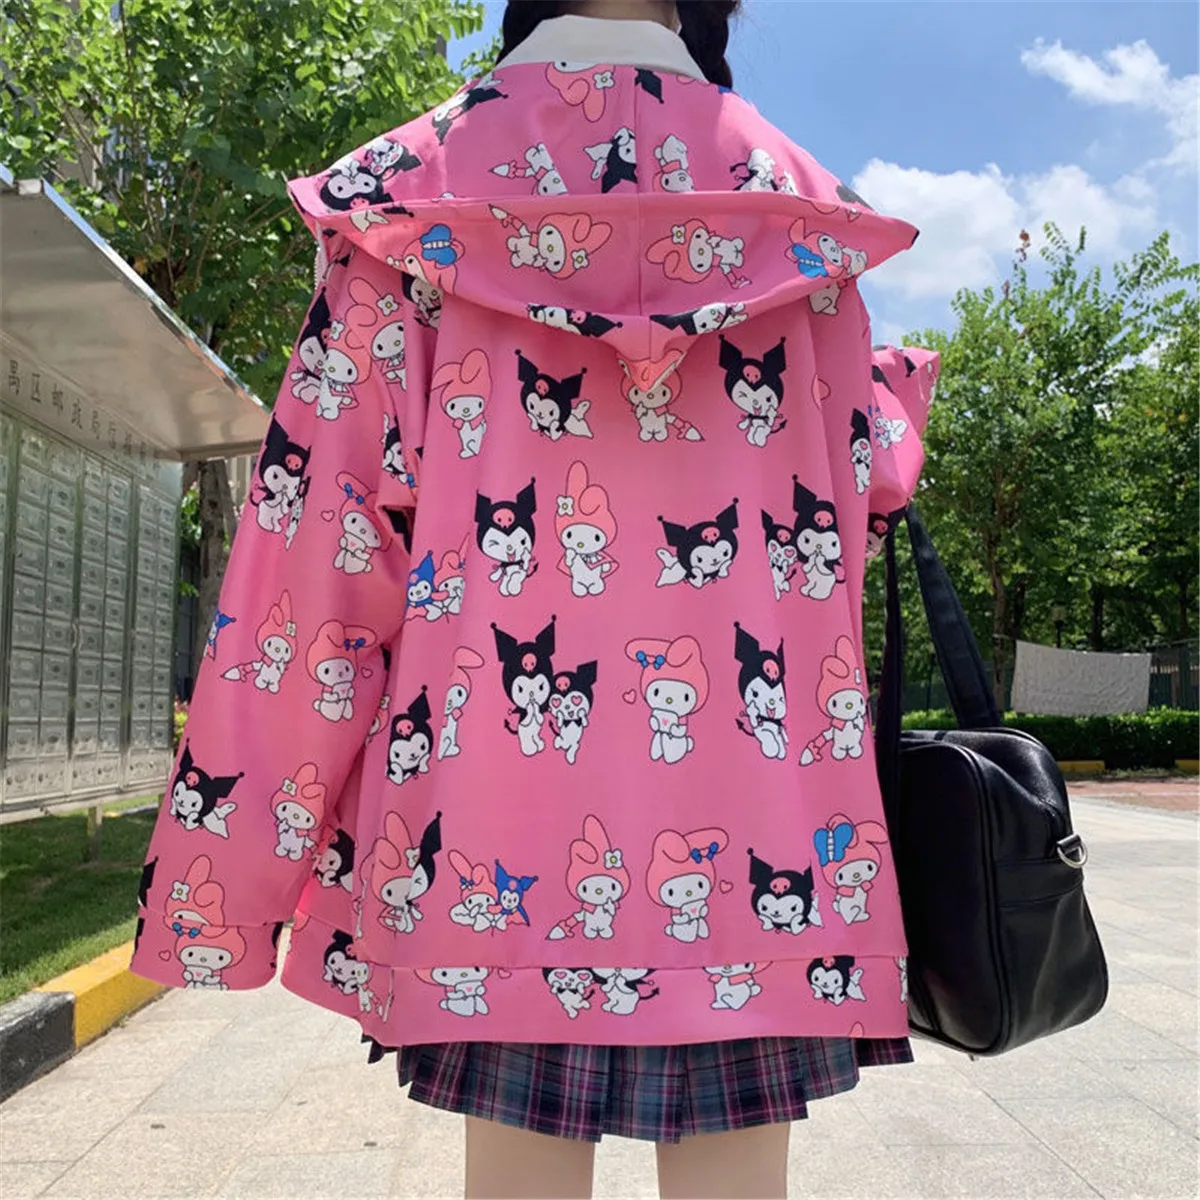 teddy bear hoodie 2021 Autumn Cartoon Sweatshirt Female Harajuku Streetwear Cute Zipper Hoodies Women Anime Teens Pullover Oversized Tops Hoodie fox racing hooded shirts & tops